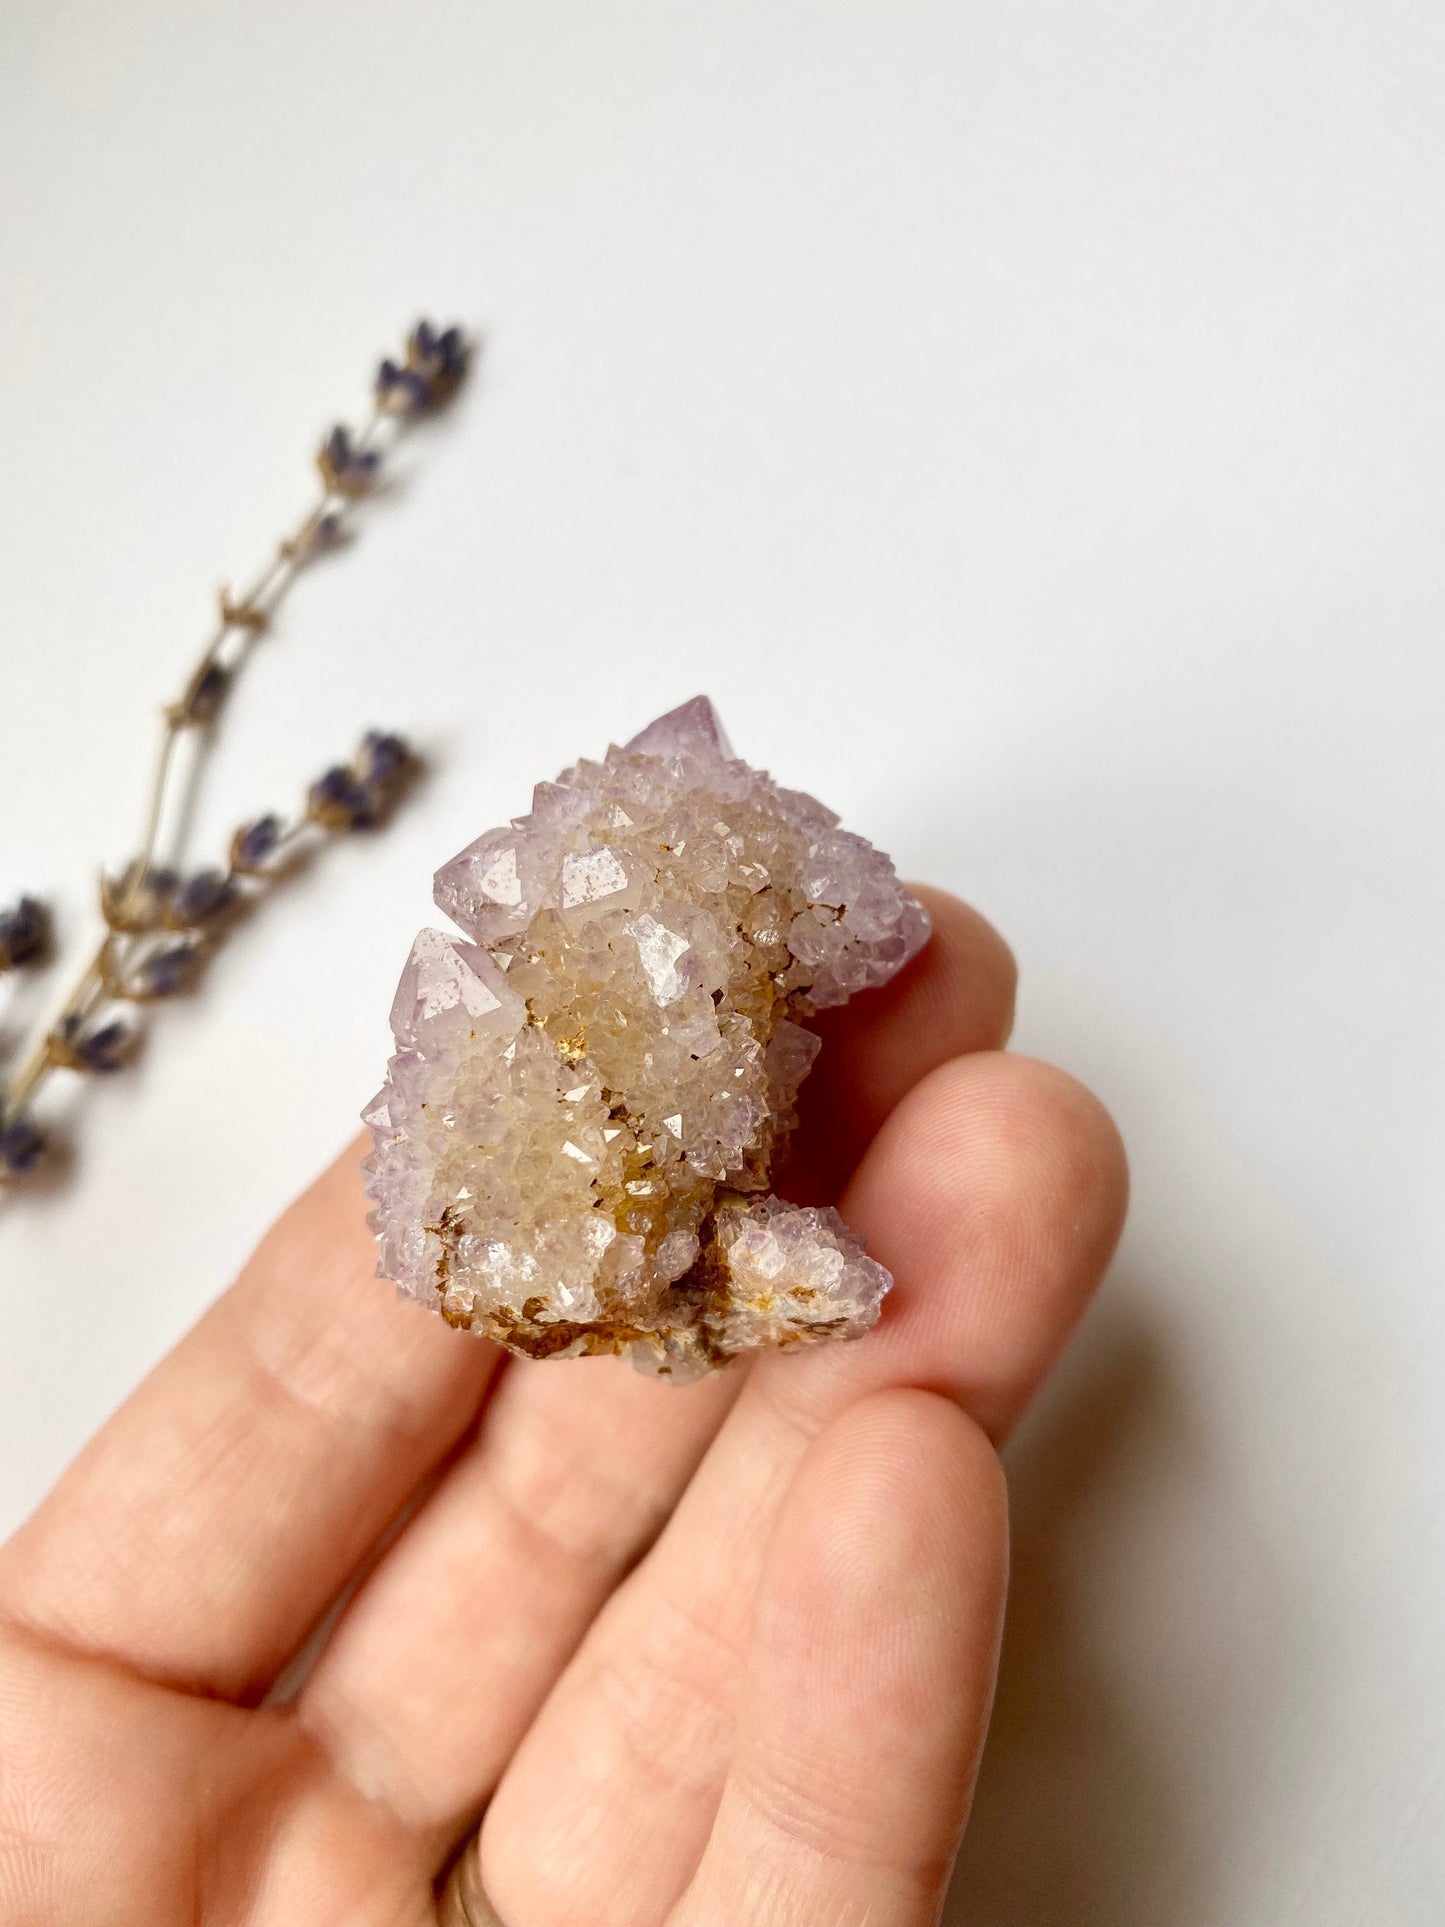 Ametrine Cactus Quartz Crystal with several terminations - Spirit Quartz Amethyst and Citrine